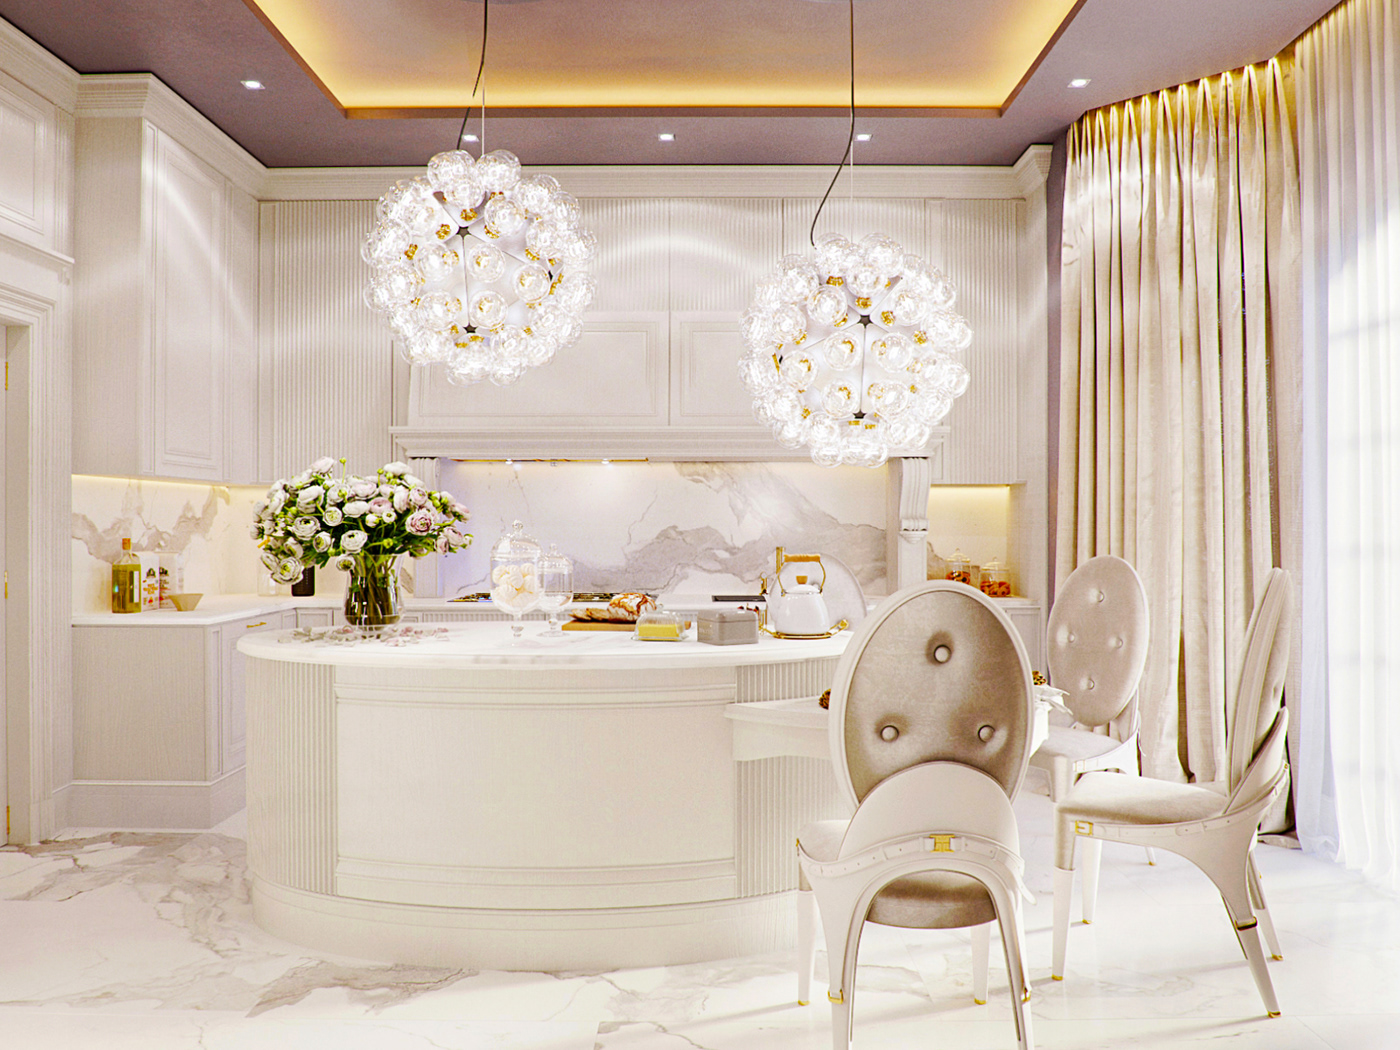 autodesk 3ds max corona renderer luxury interior design  kitchen Render Maison House Flos styling 